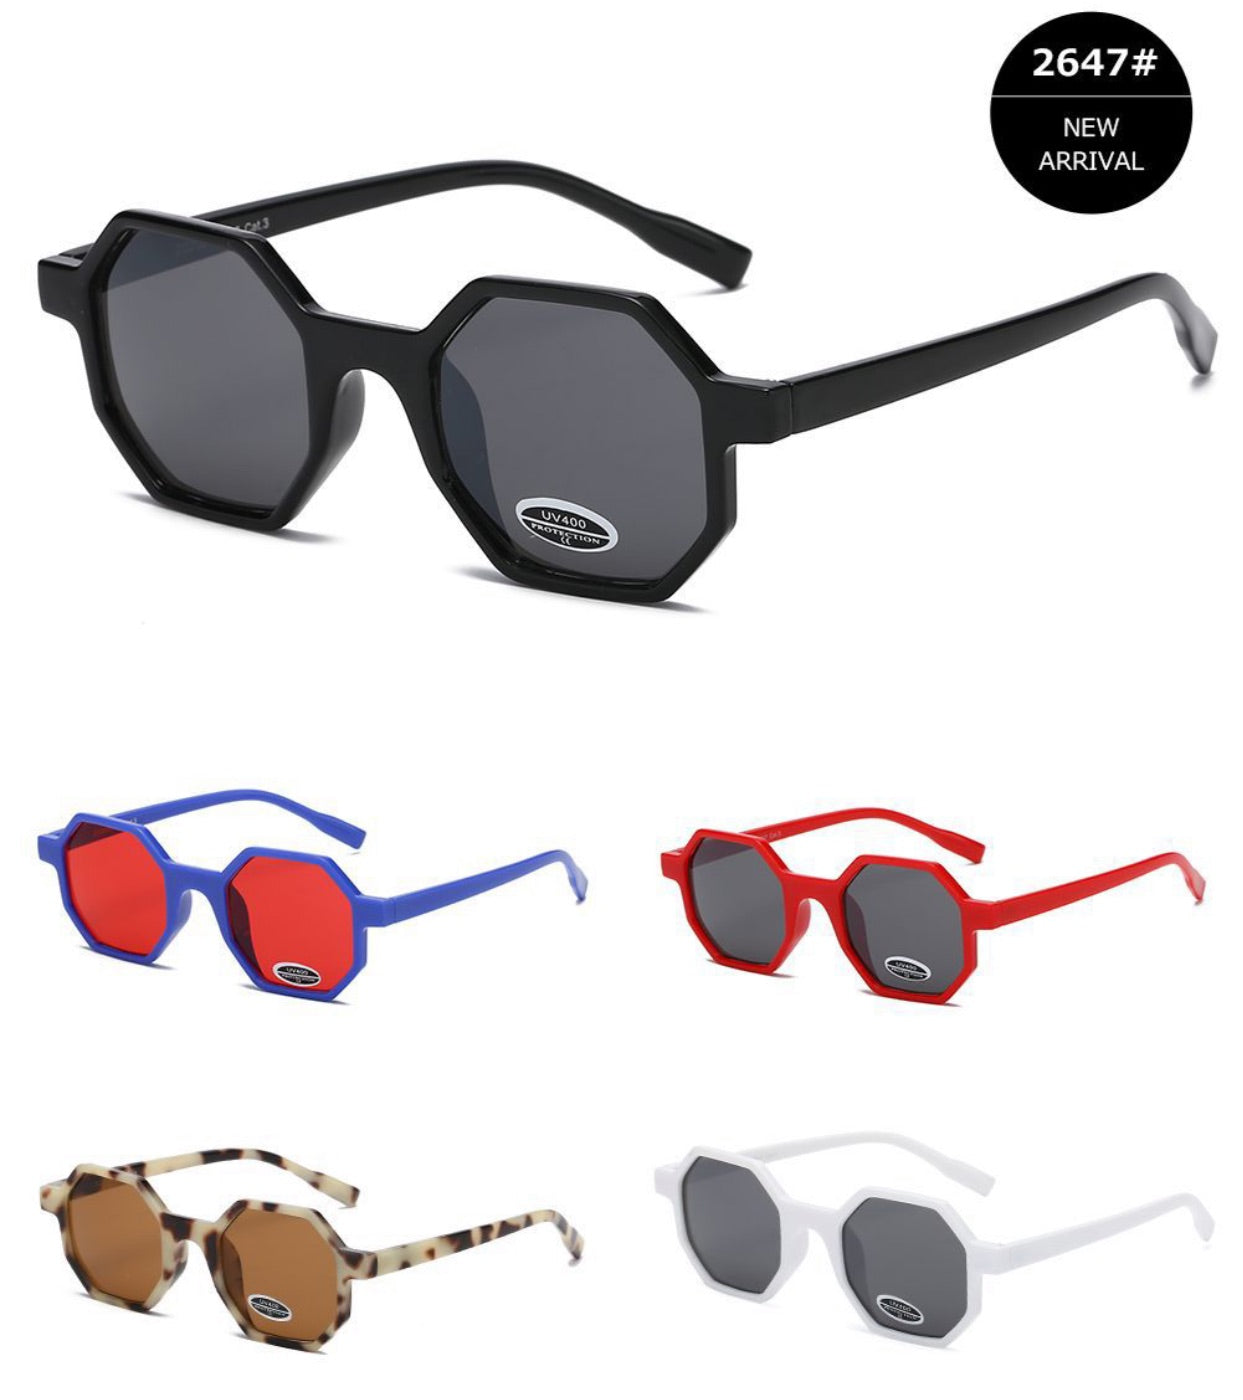 Sunglasses S2647